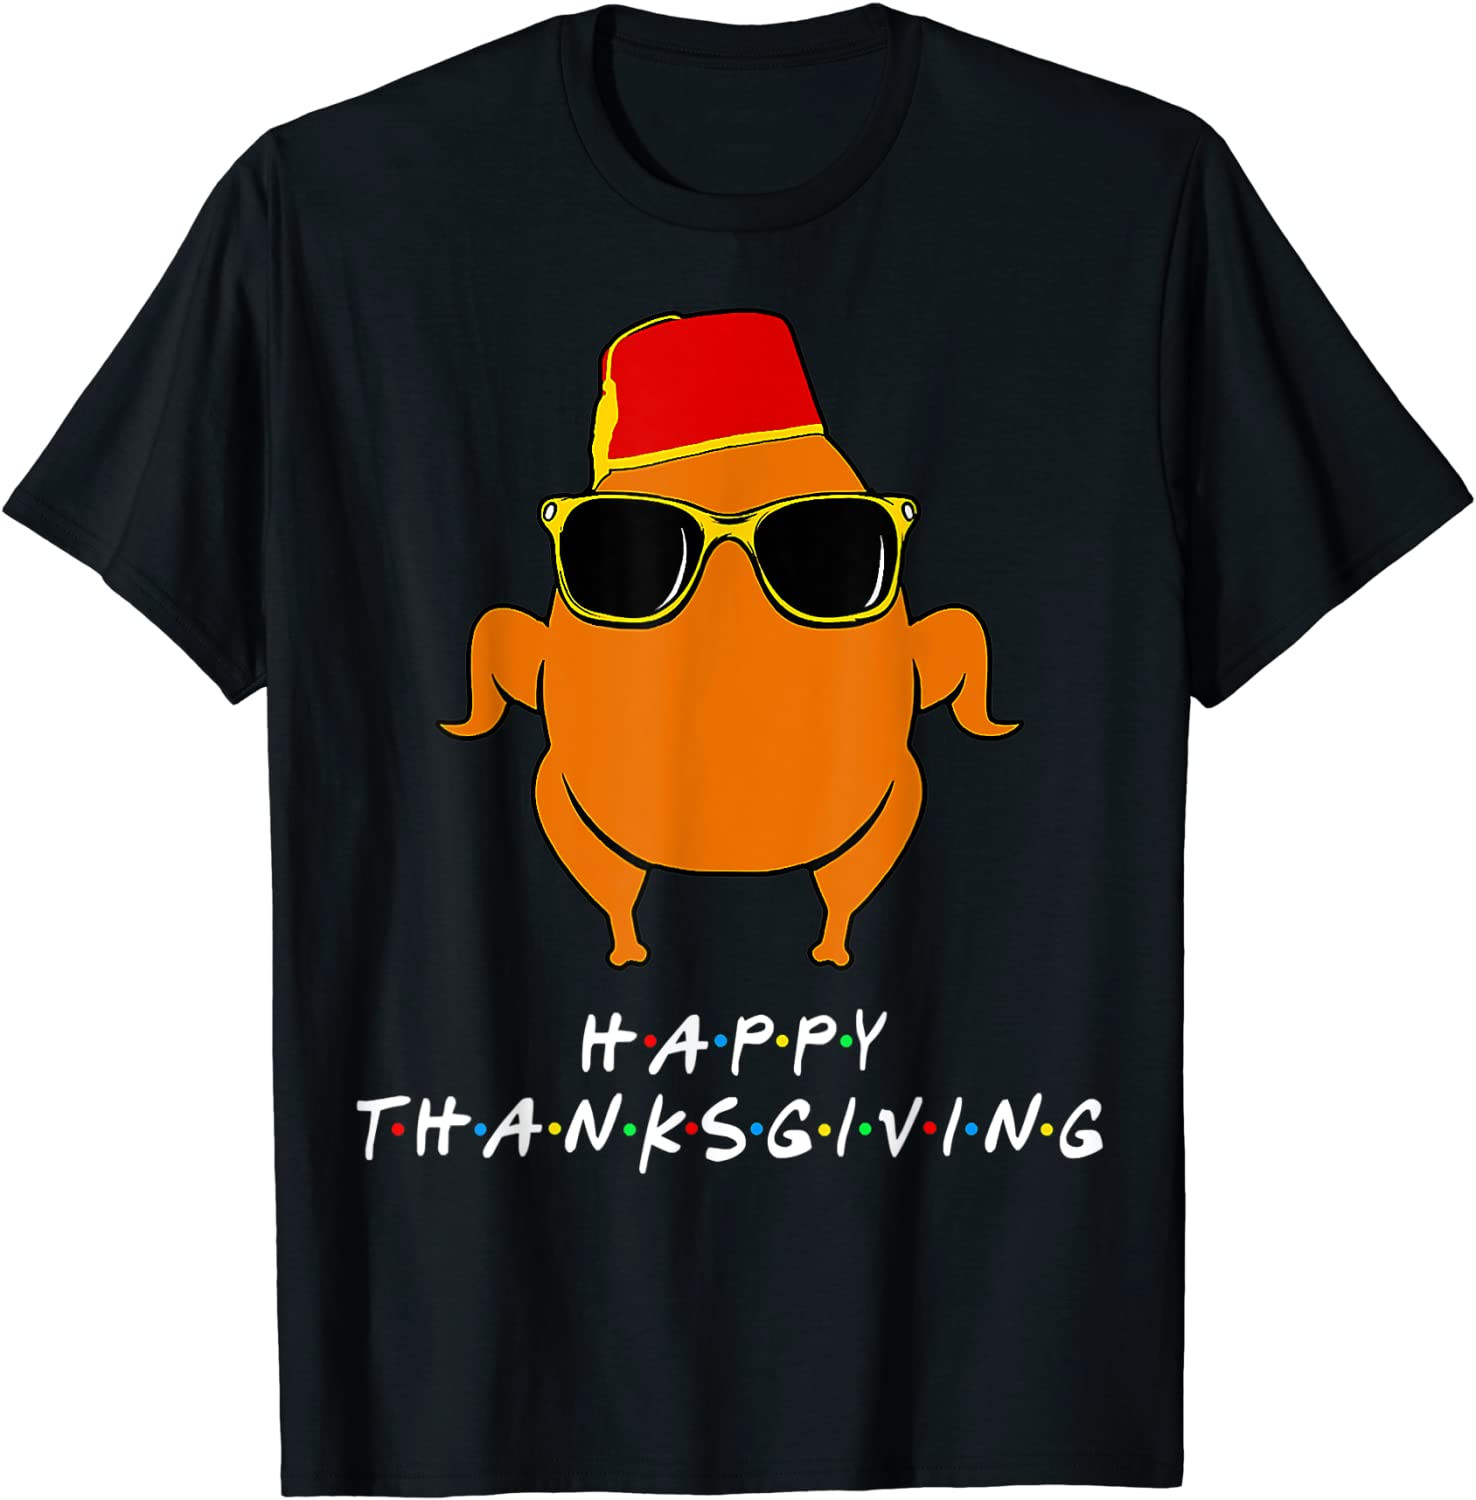 Thanksgiving For Friends T-Shirt